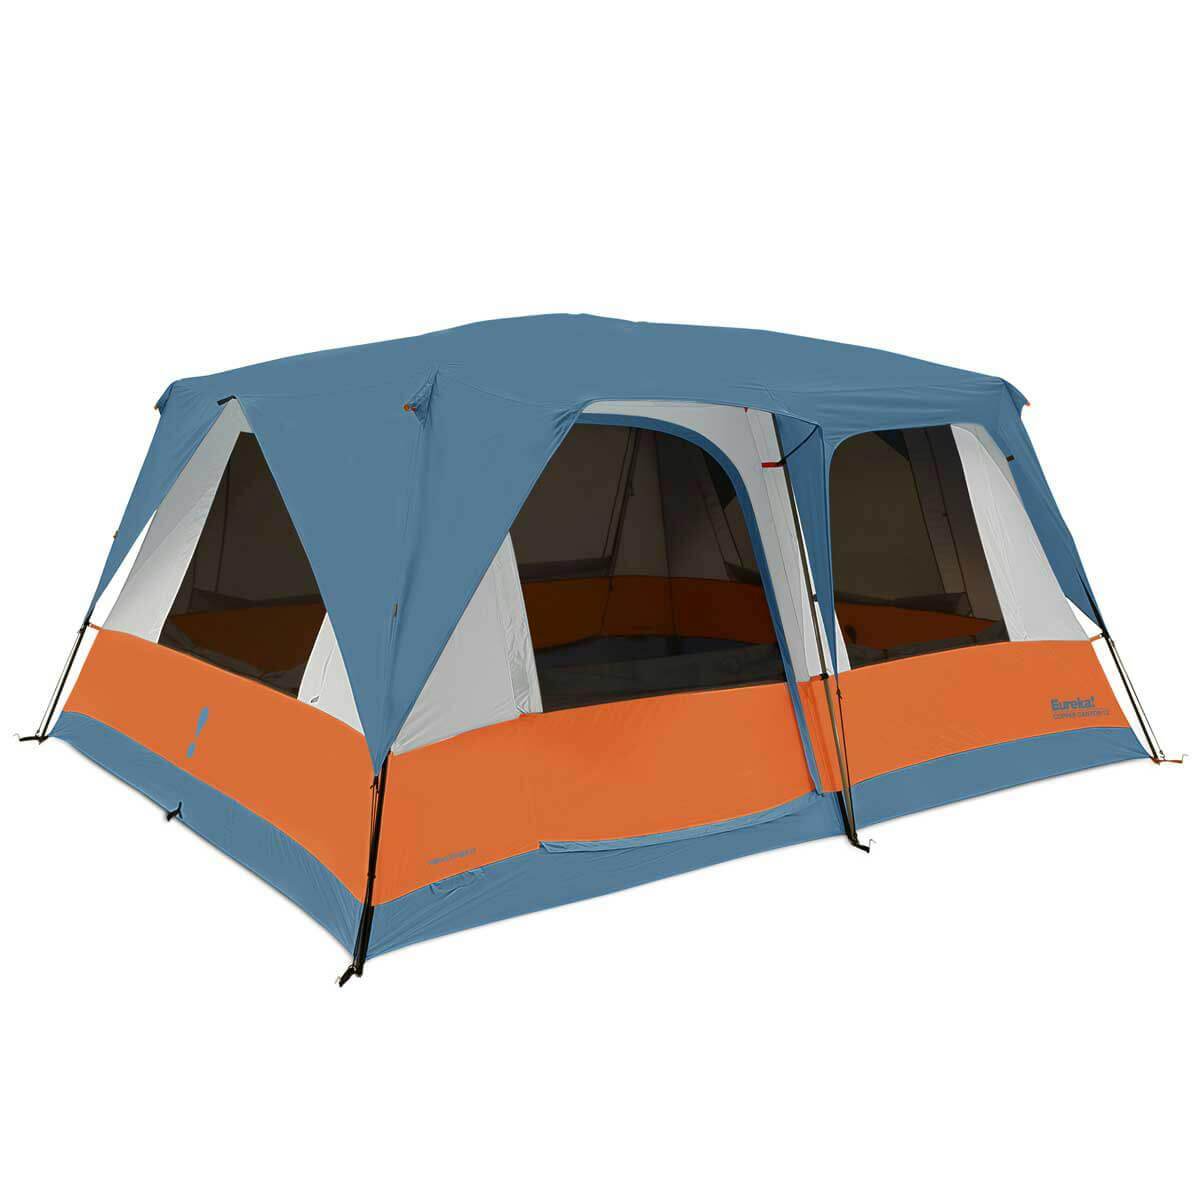 Eureka! Copper Canyon LX  6 Person Tent · Blue Heaven/Jaffa Orange/Dawn Blue